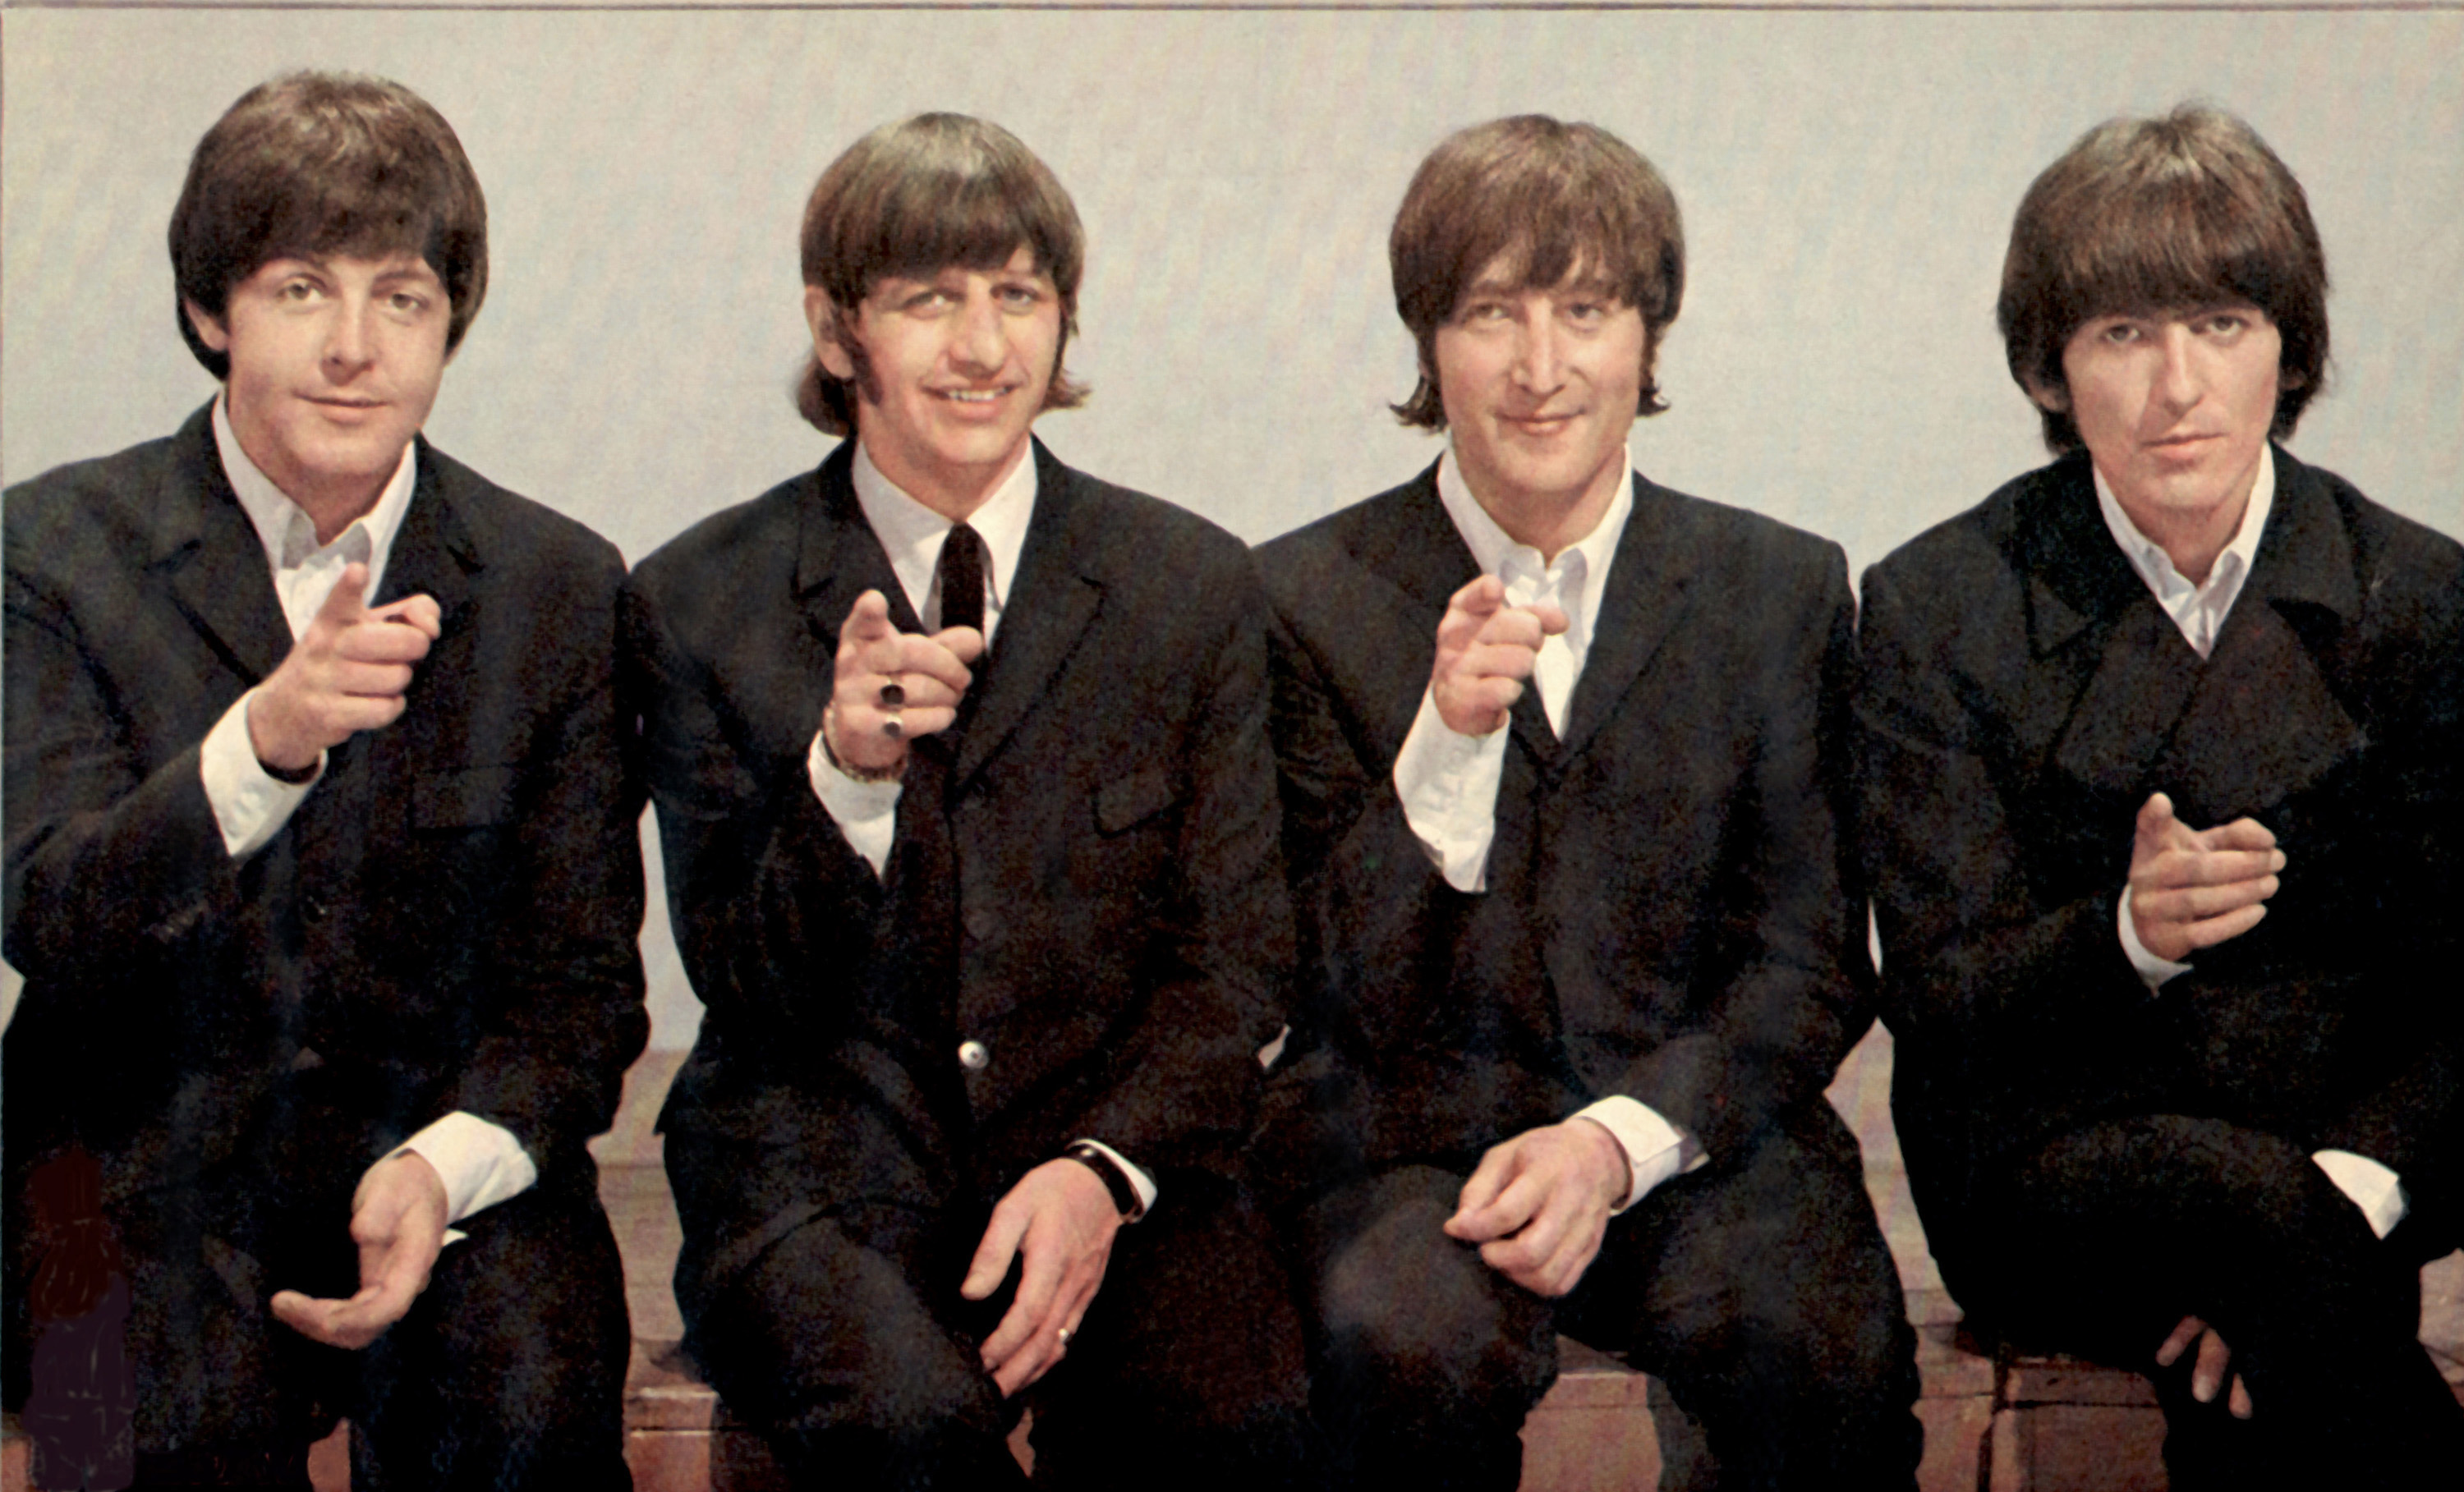 The Beatles' Paul McCartney, Ringo Starr, John Lennon, and George Harrison pointing